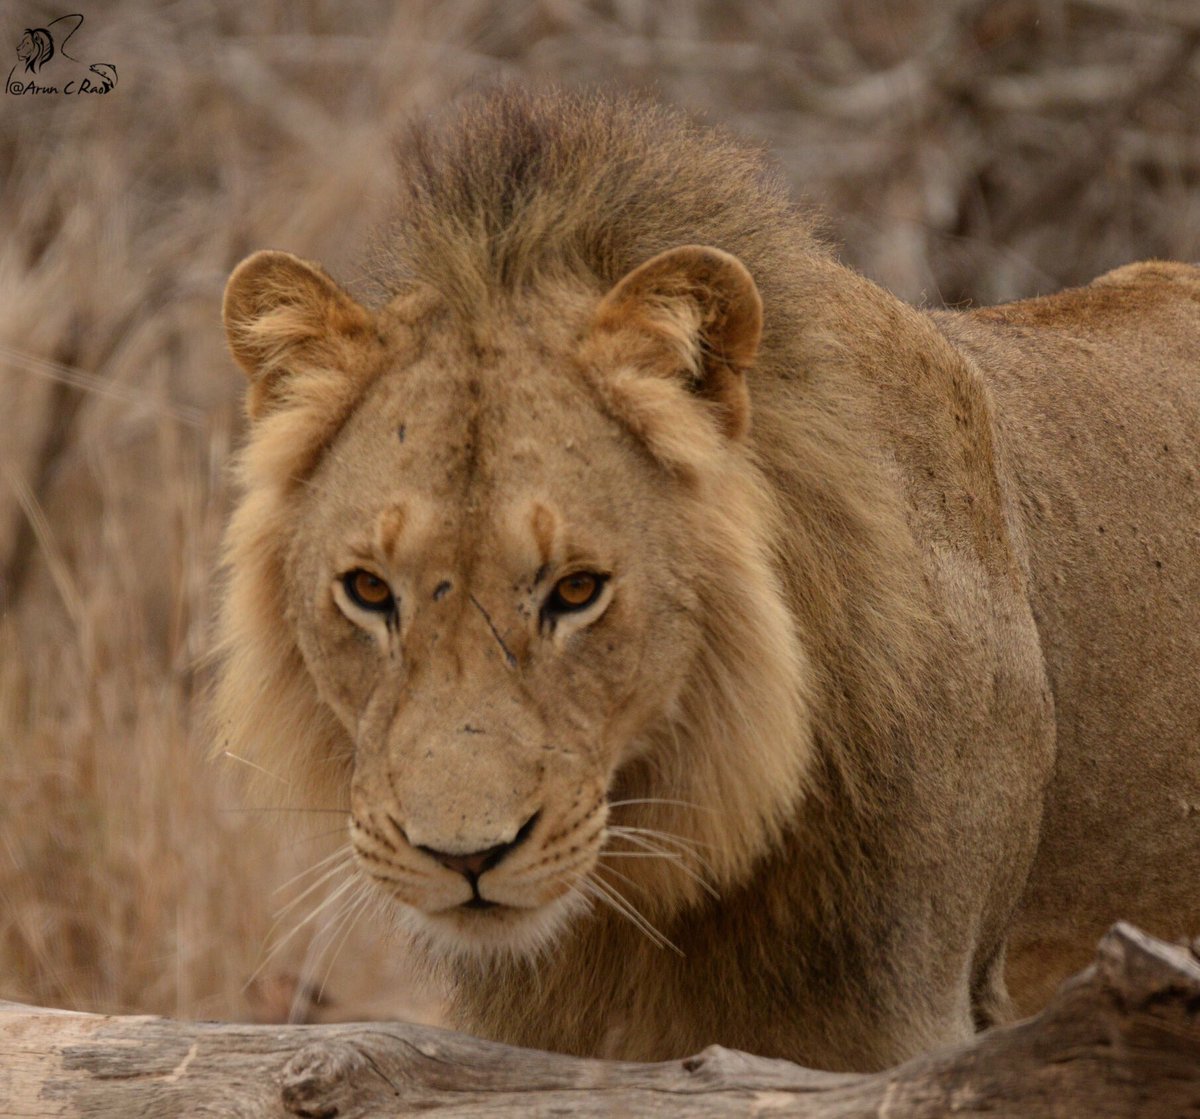 Future King!!!!
#krugernationalpark #sanparks #lion #bigcat #big5 #bigcats #safarilive #wildearth #safari #africa #wildlifeofSA #nature #wildlife #wildlifephotography #photosafari #guidedsafari #global4nature #southafricathroughmyeyes #legendary #legend_safaris #legendsafaris